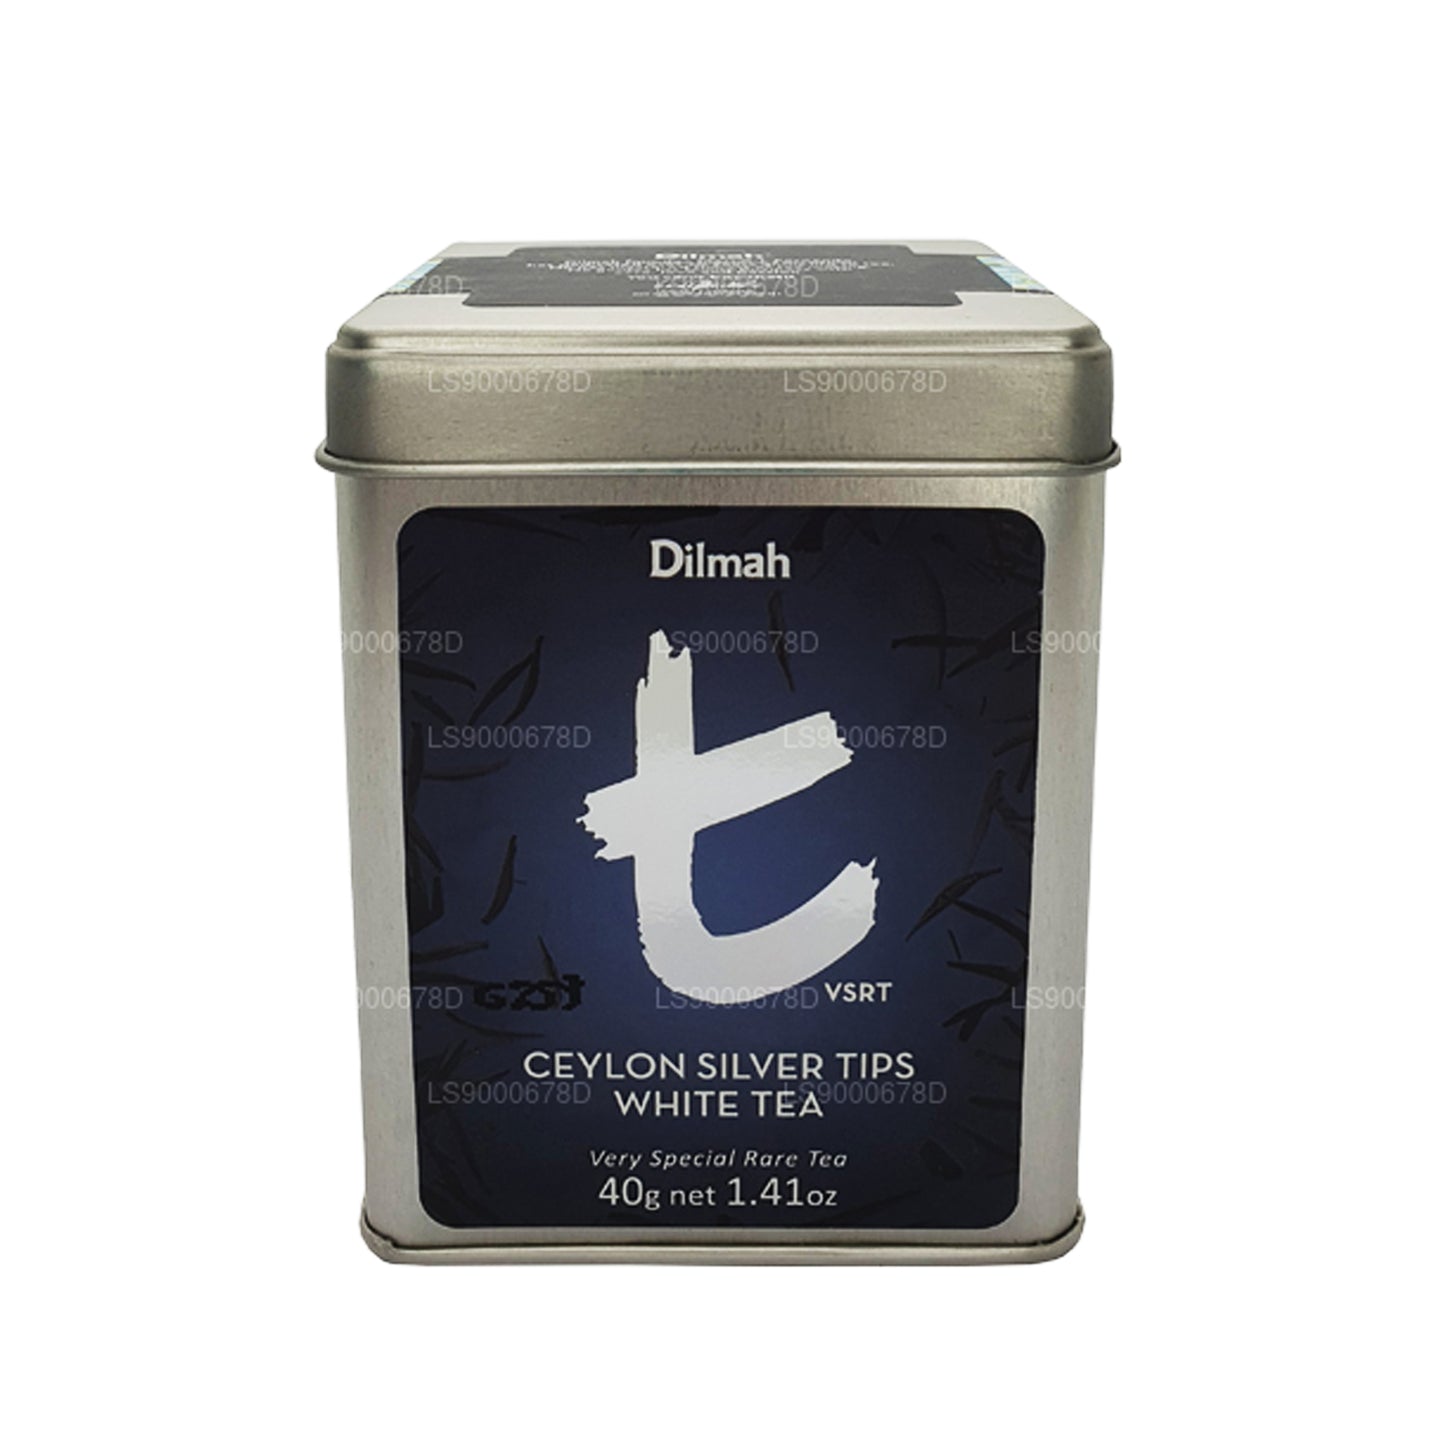 Dilmah t-Series Ceylon Silver Tips White Tea (40g) Caddy